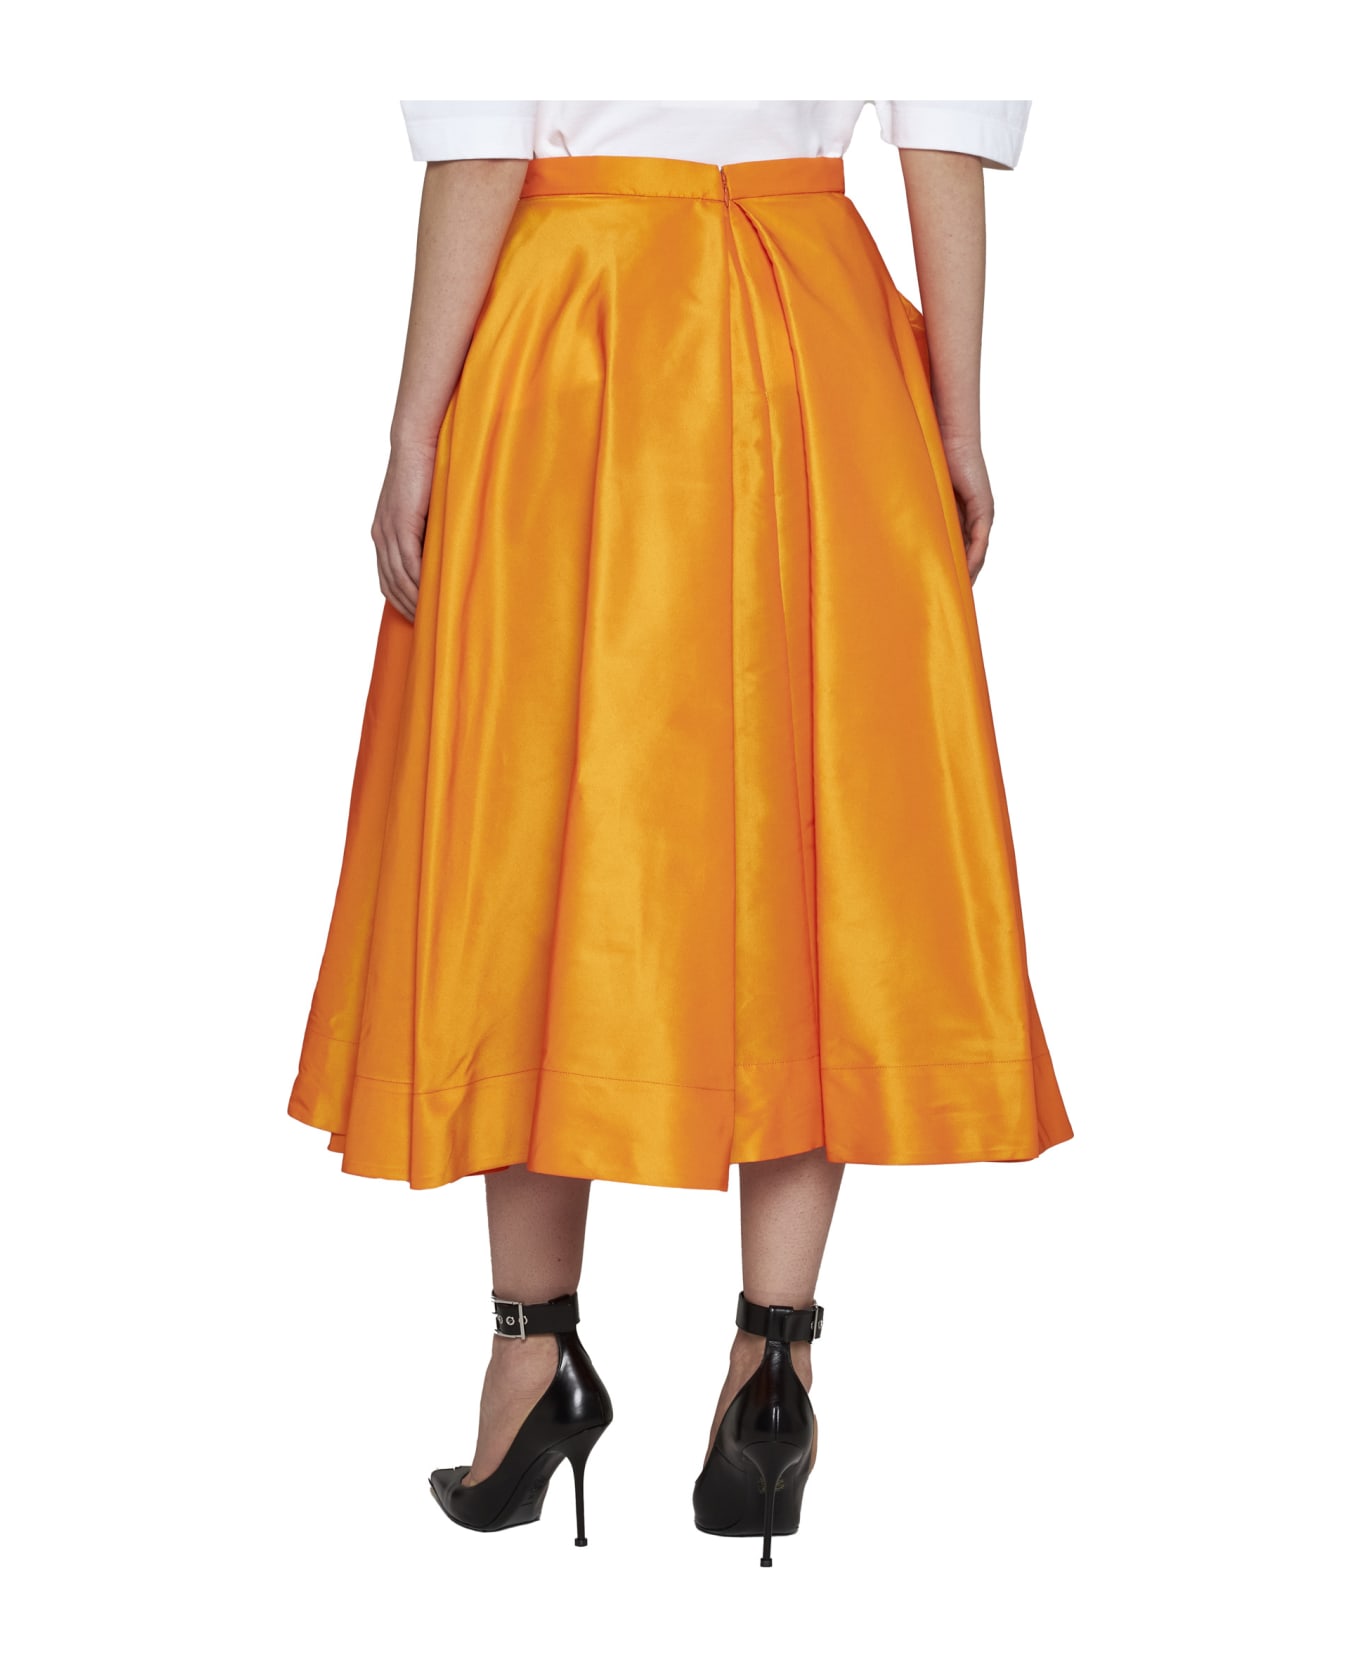 Alexander McQueen Skirt - Sunset orange スカート